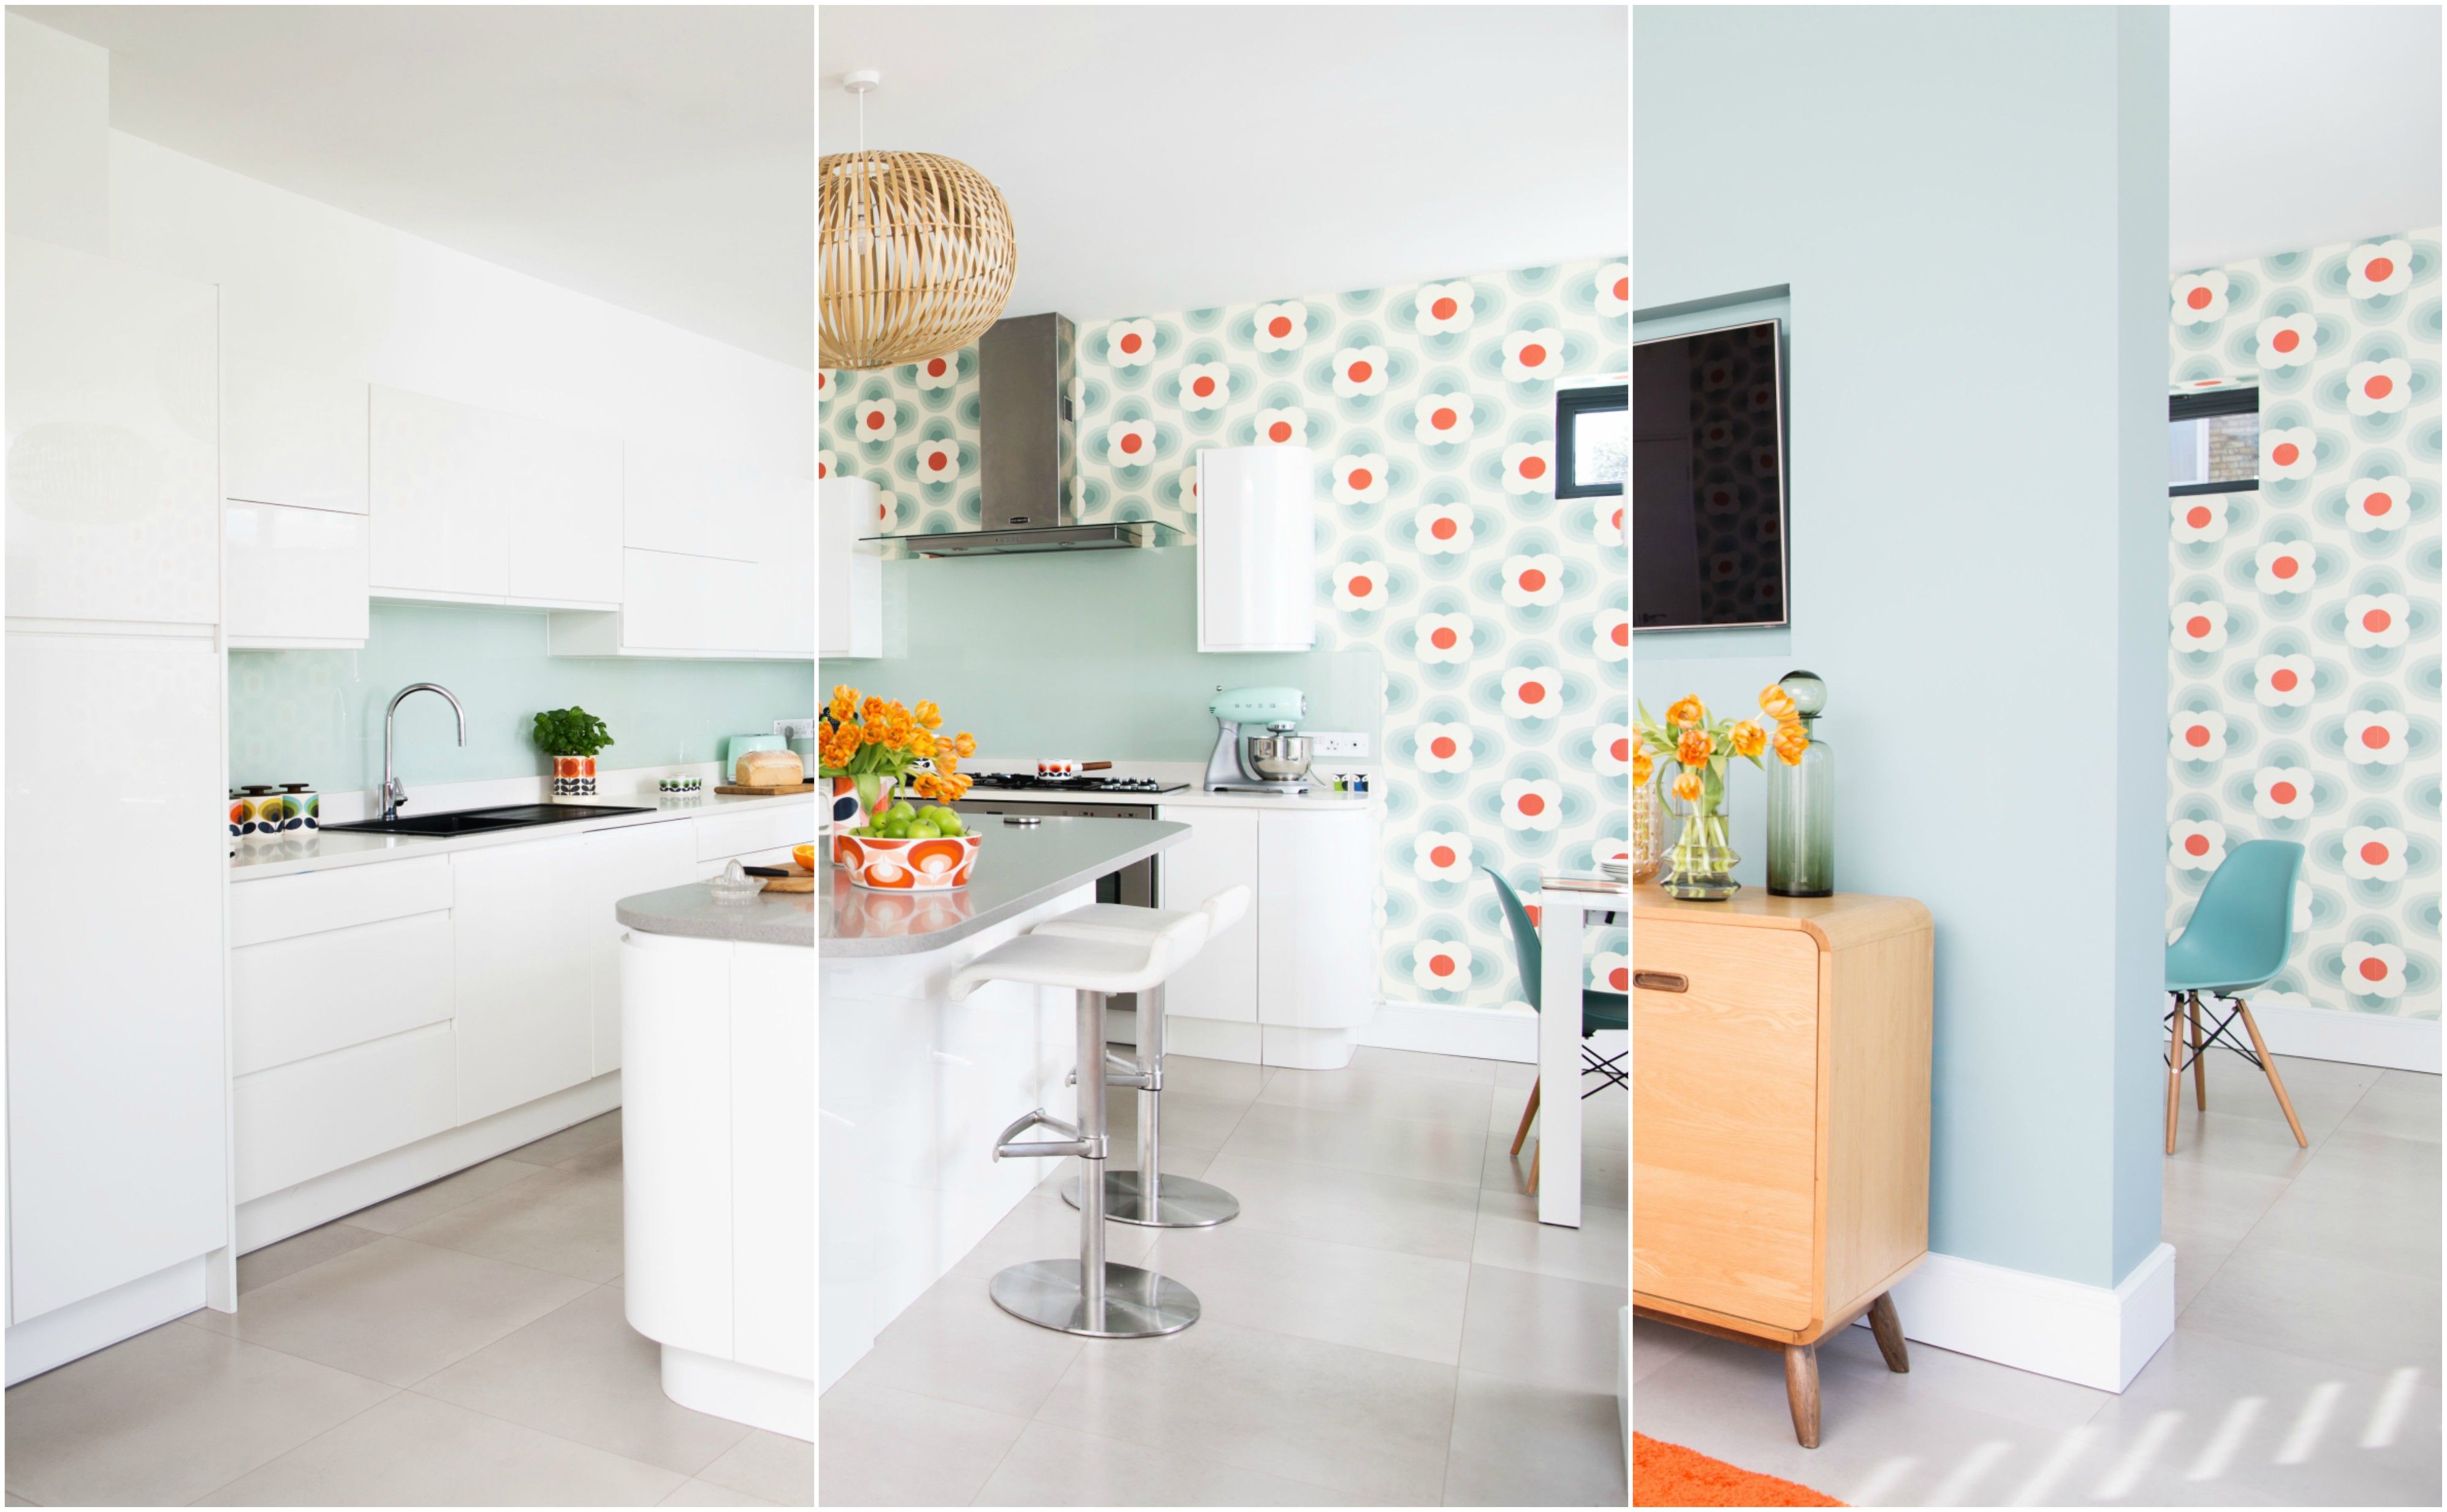 Orla Kiely Wallpaper Brings Colourful Retro Look To New Kitchen Design